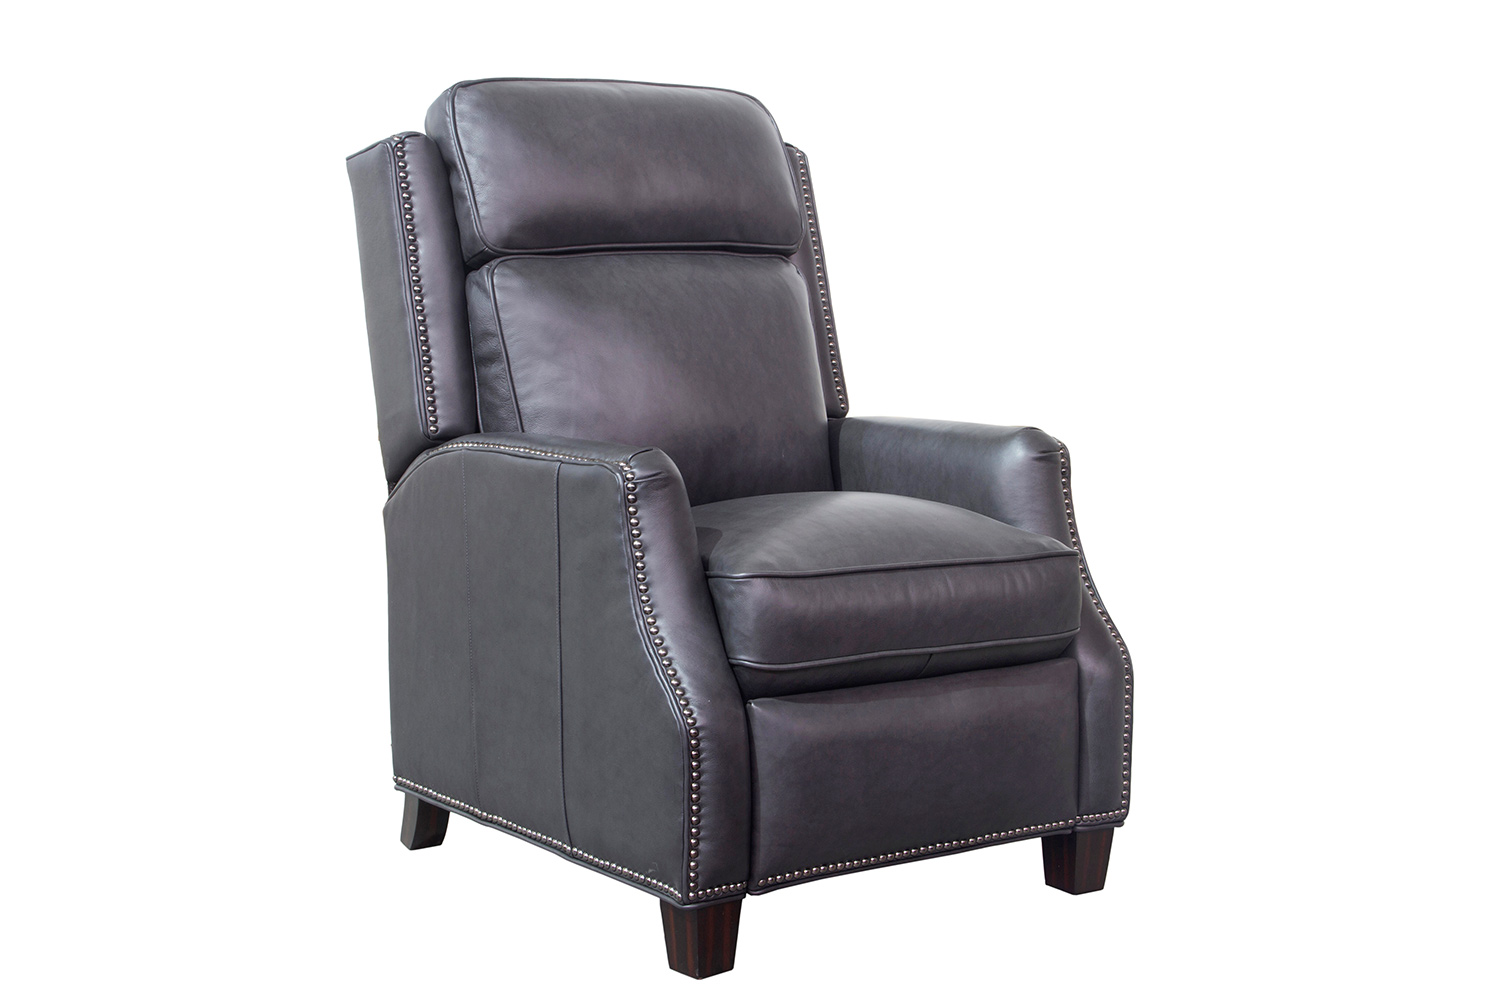 Barcalounger Van Buren Recliner Chair - Shoreham Gray/All Leather